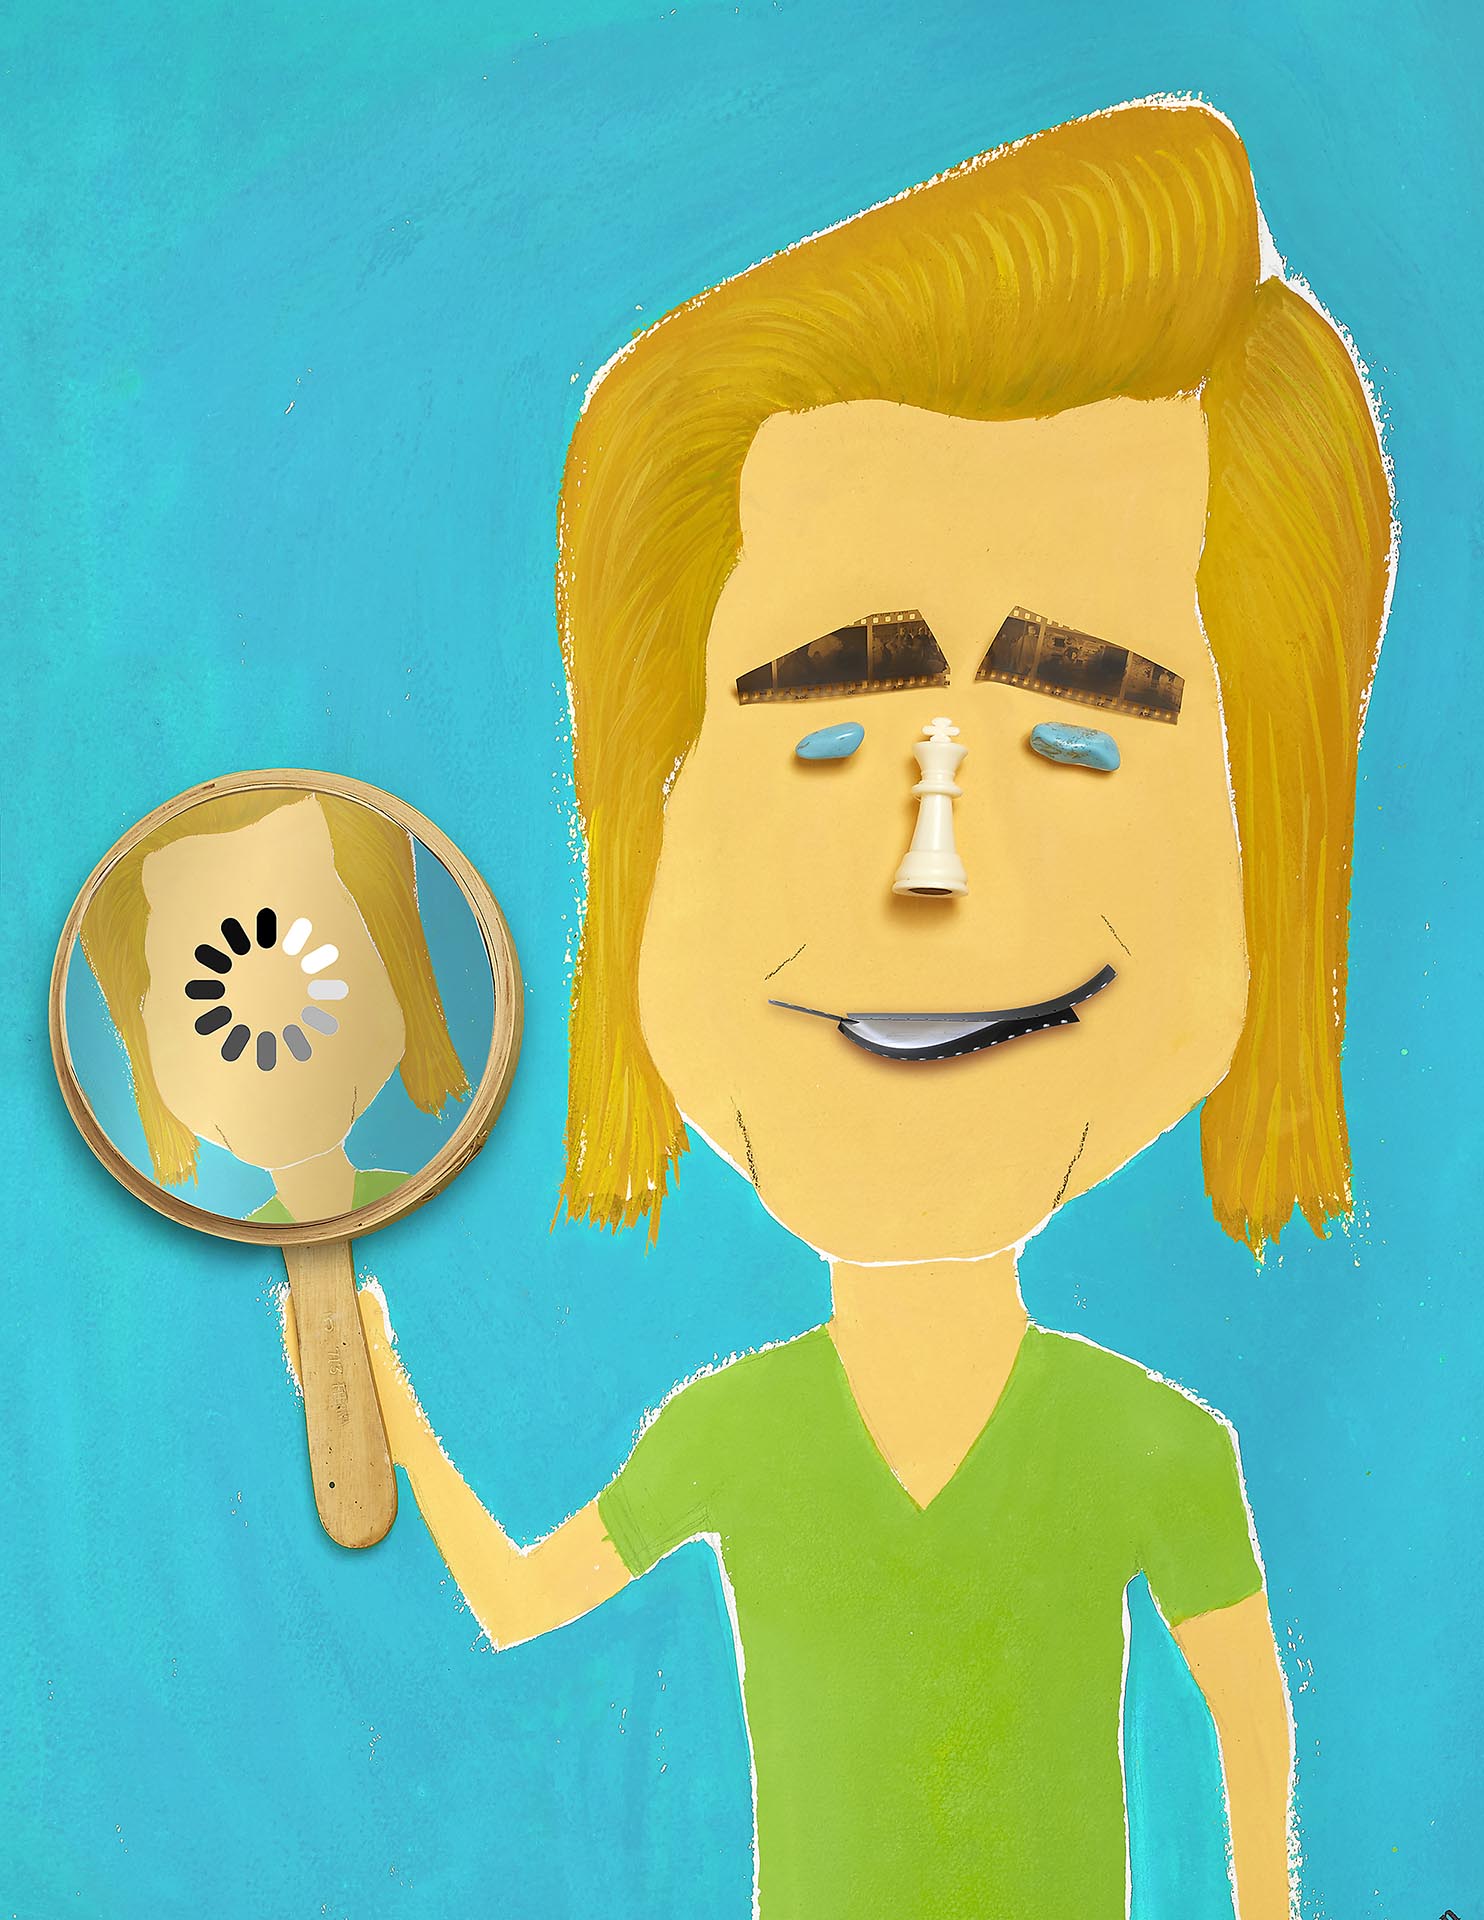 Illustration of Brad Pitt with a mirror